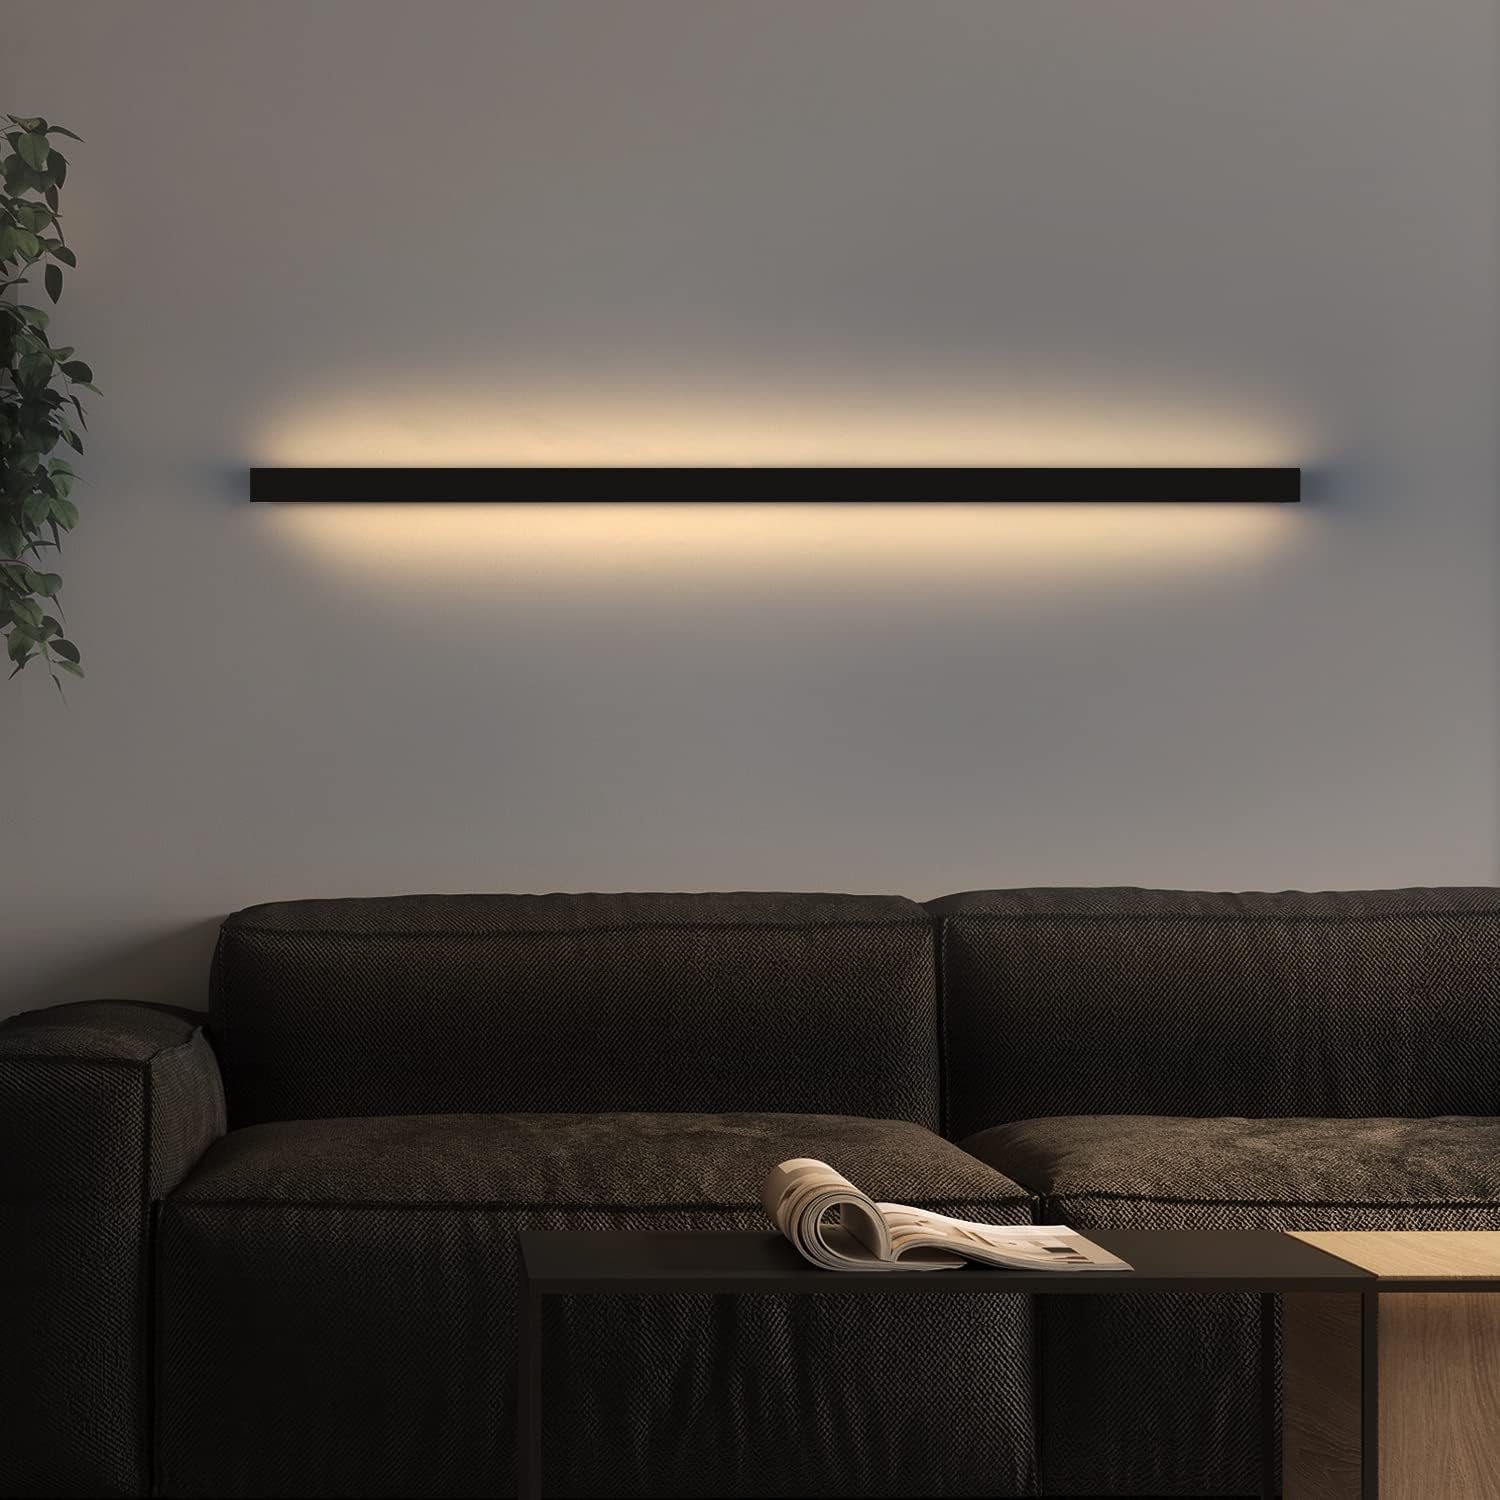 Nettlife LED Wandleuchte Wandlampe Schwarz innen Modern 60CM 21W Up Down Wandbeleuchtung, nicht dimmbar, LED fest integriert, Warmweiß, für Flur Treppenhaus Wohnzimmer Kinderzimmer Schlafzimmer